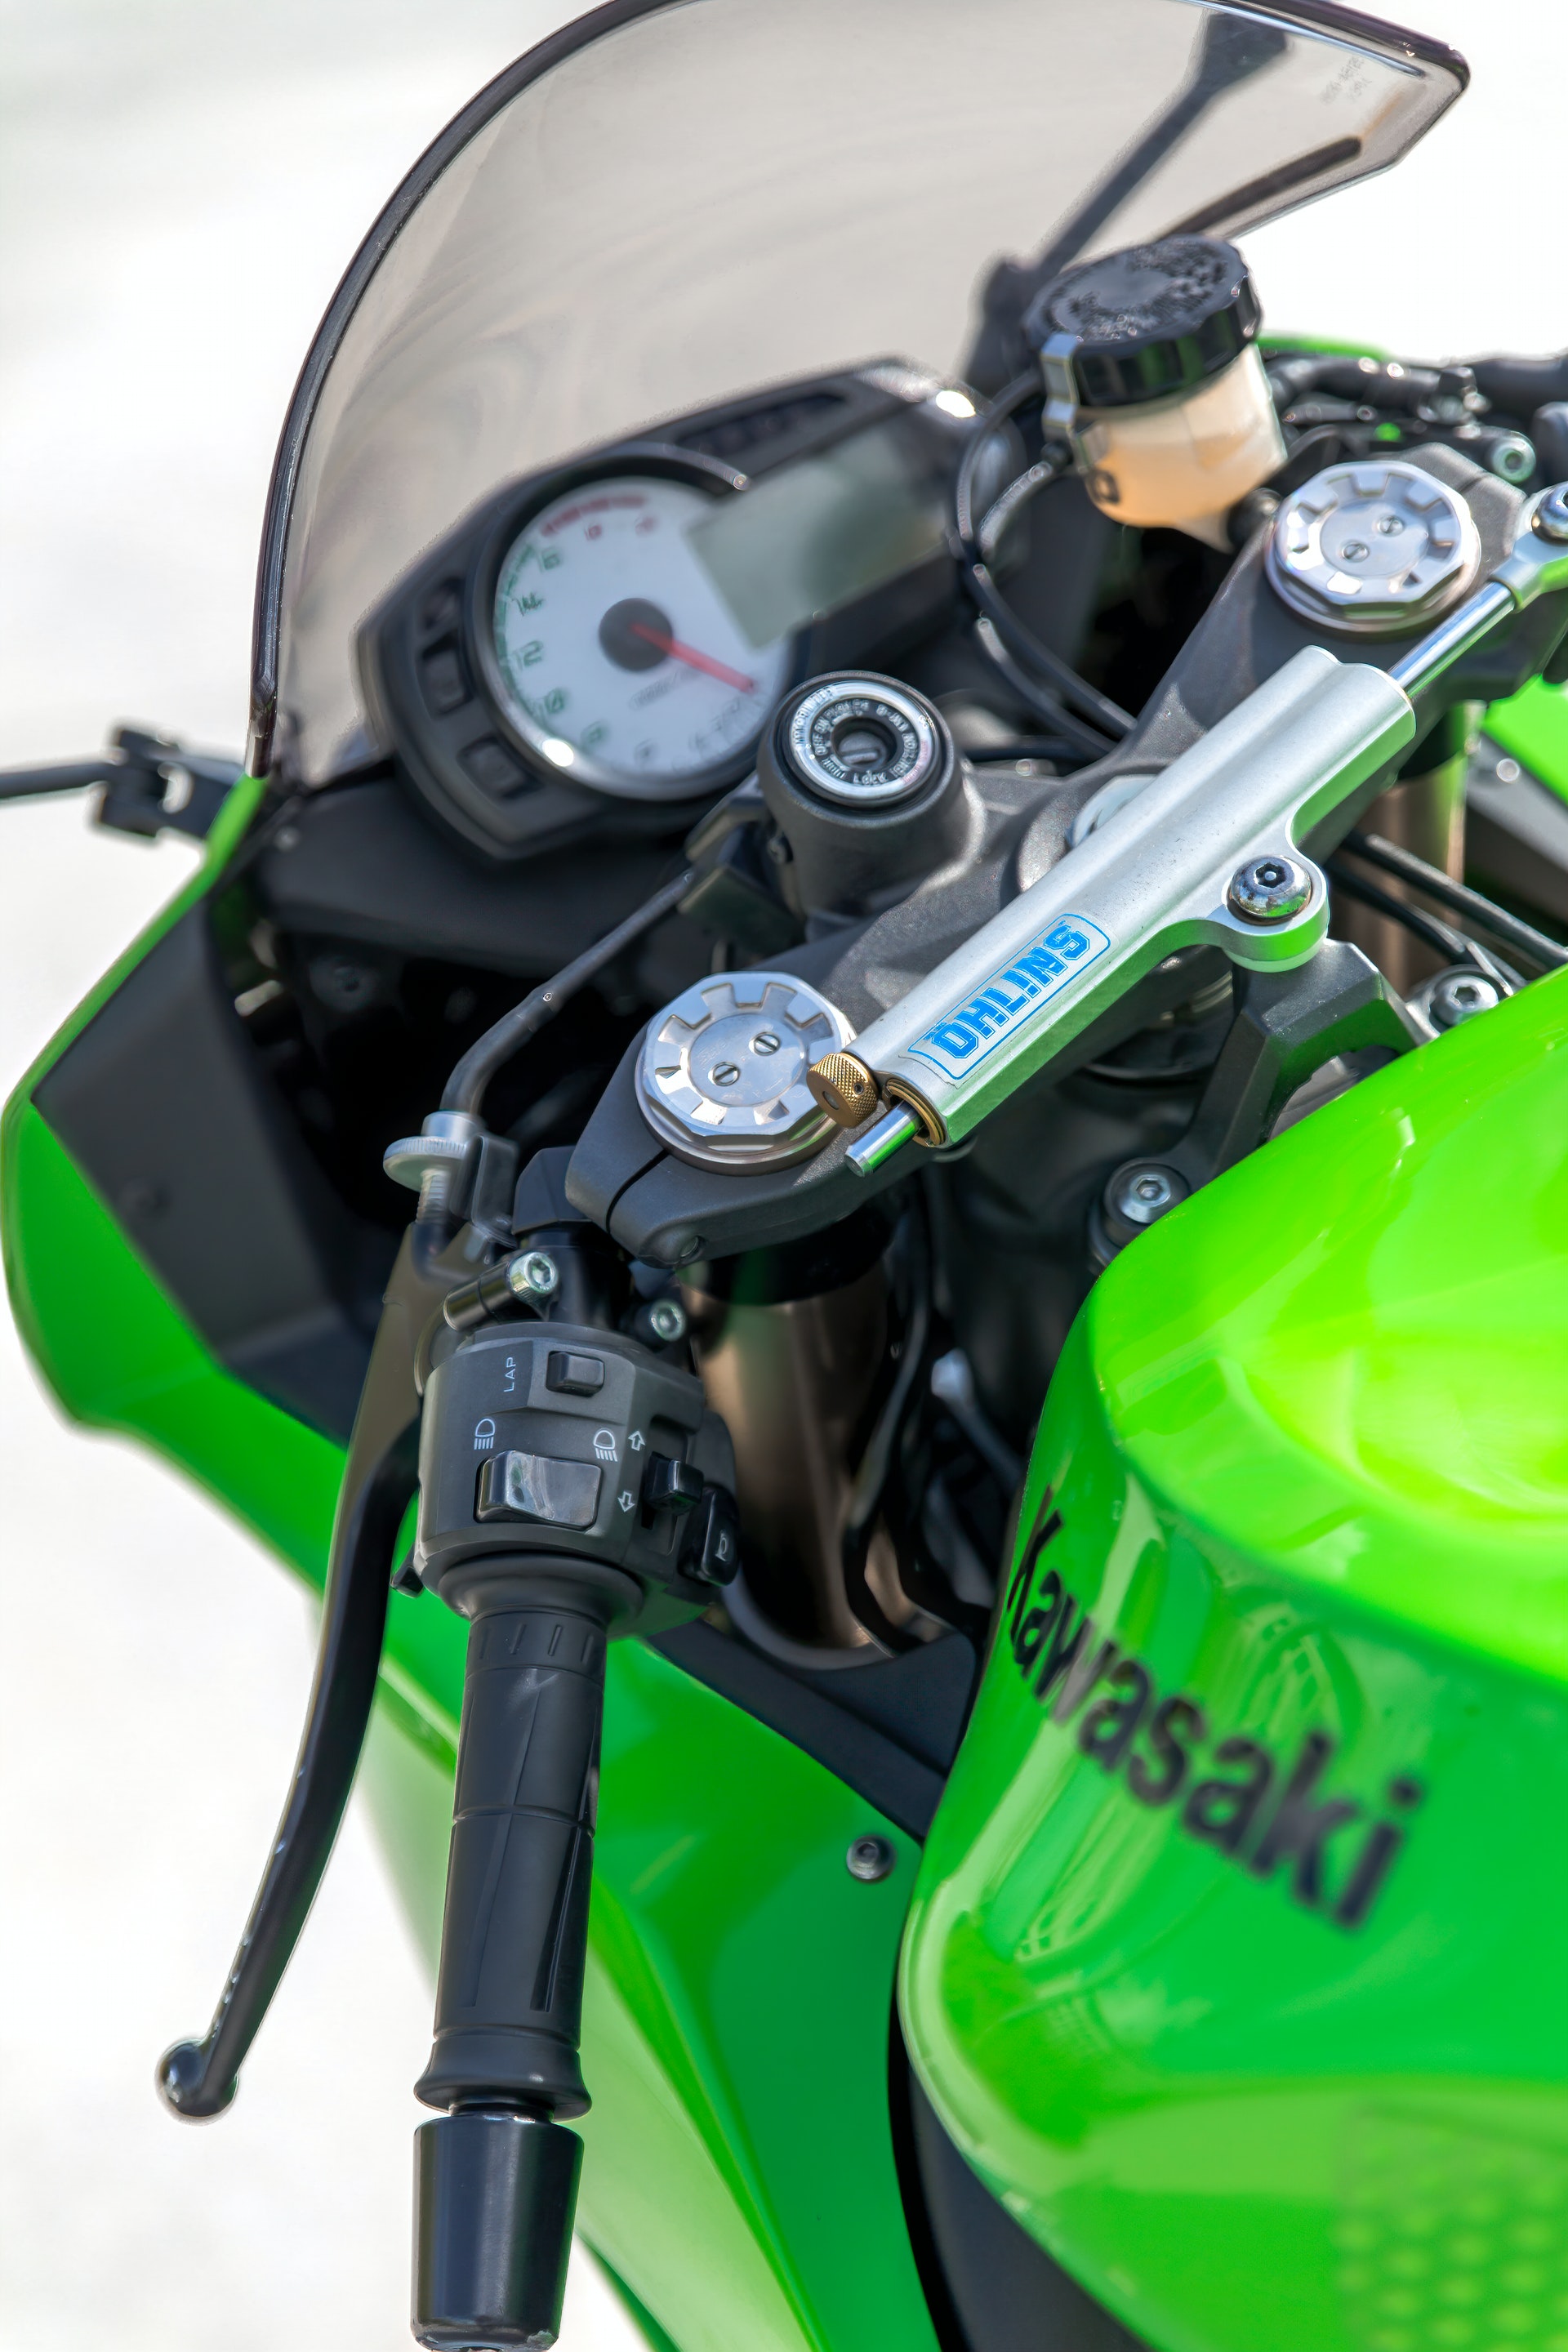 Kawasaki Extended Motorcycle Warranty